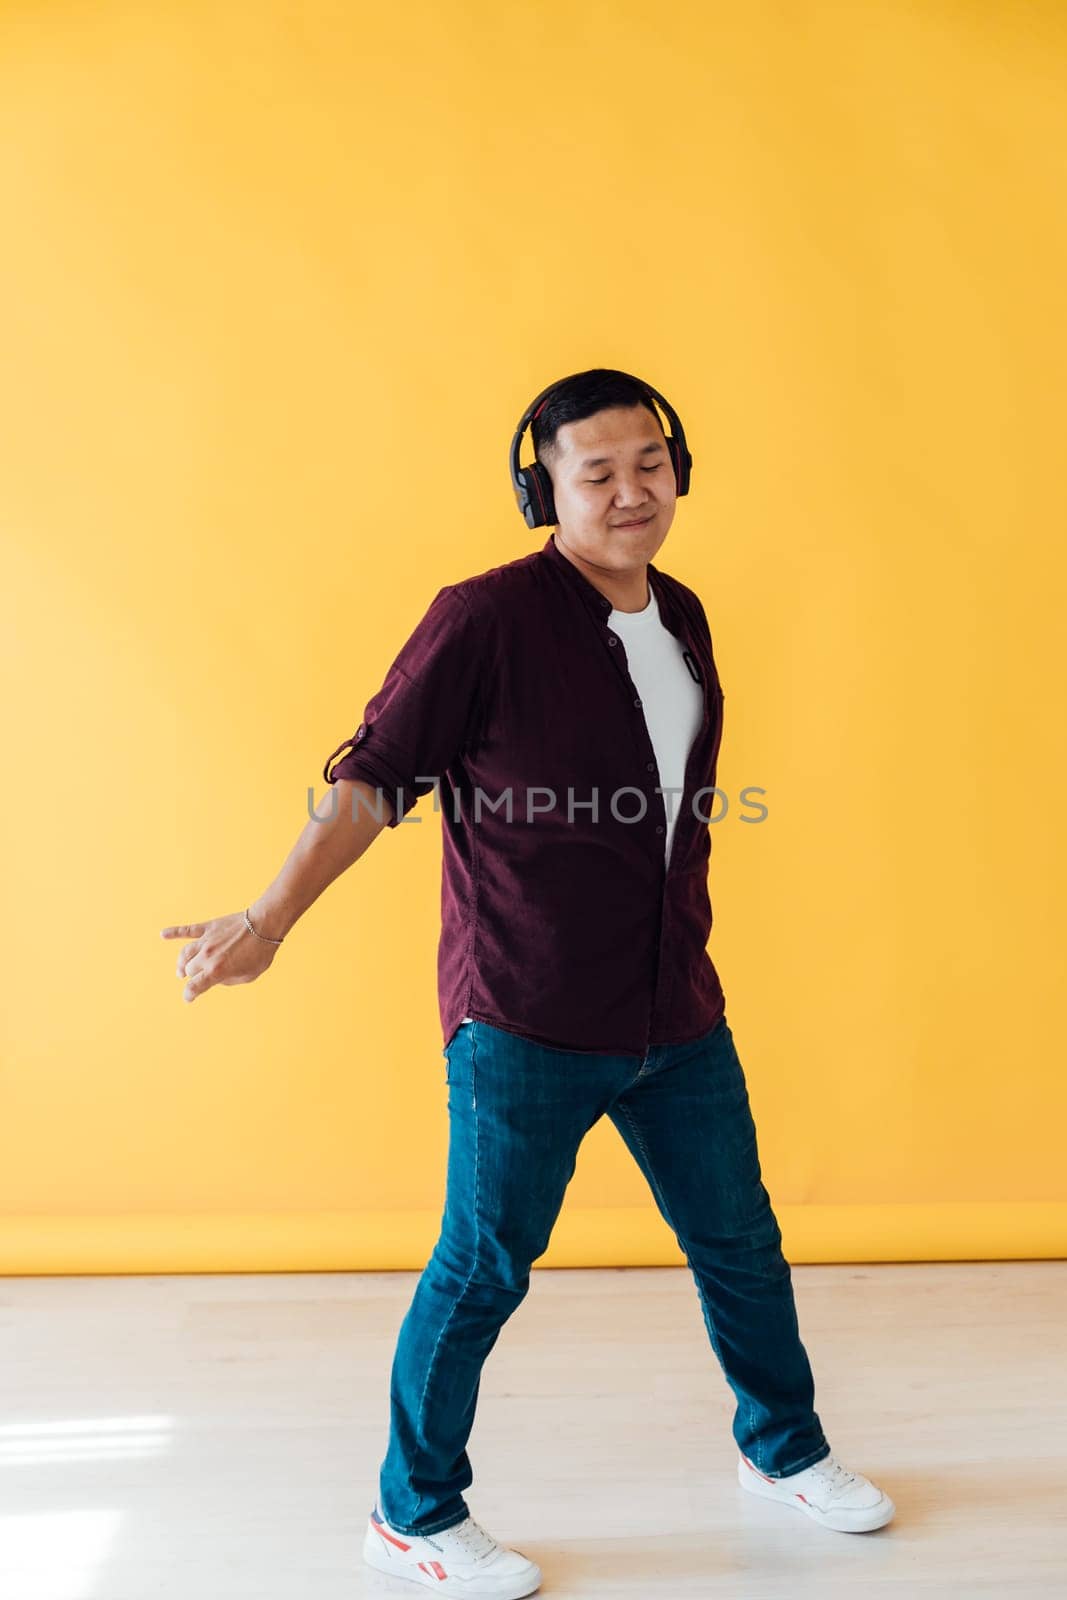 Enjoy The Rhytm. Cheerful American Guy In Wireless Headphones Listening Music And Dancing, by Simakov